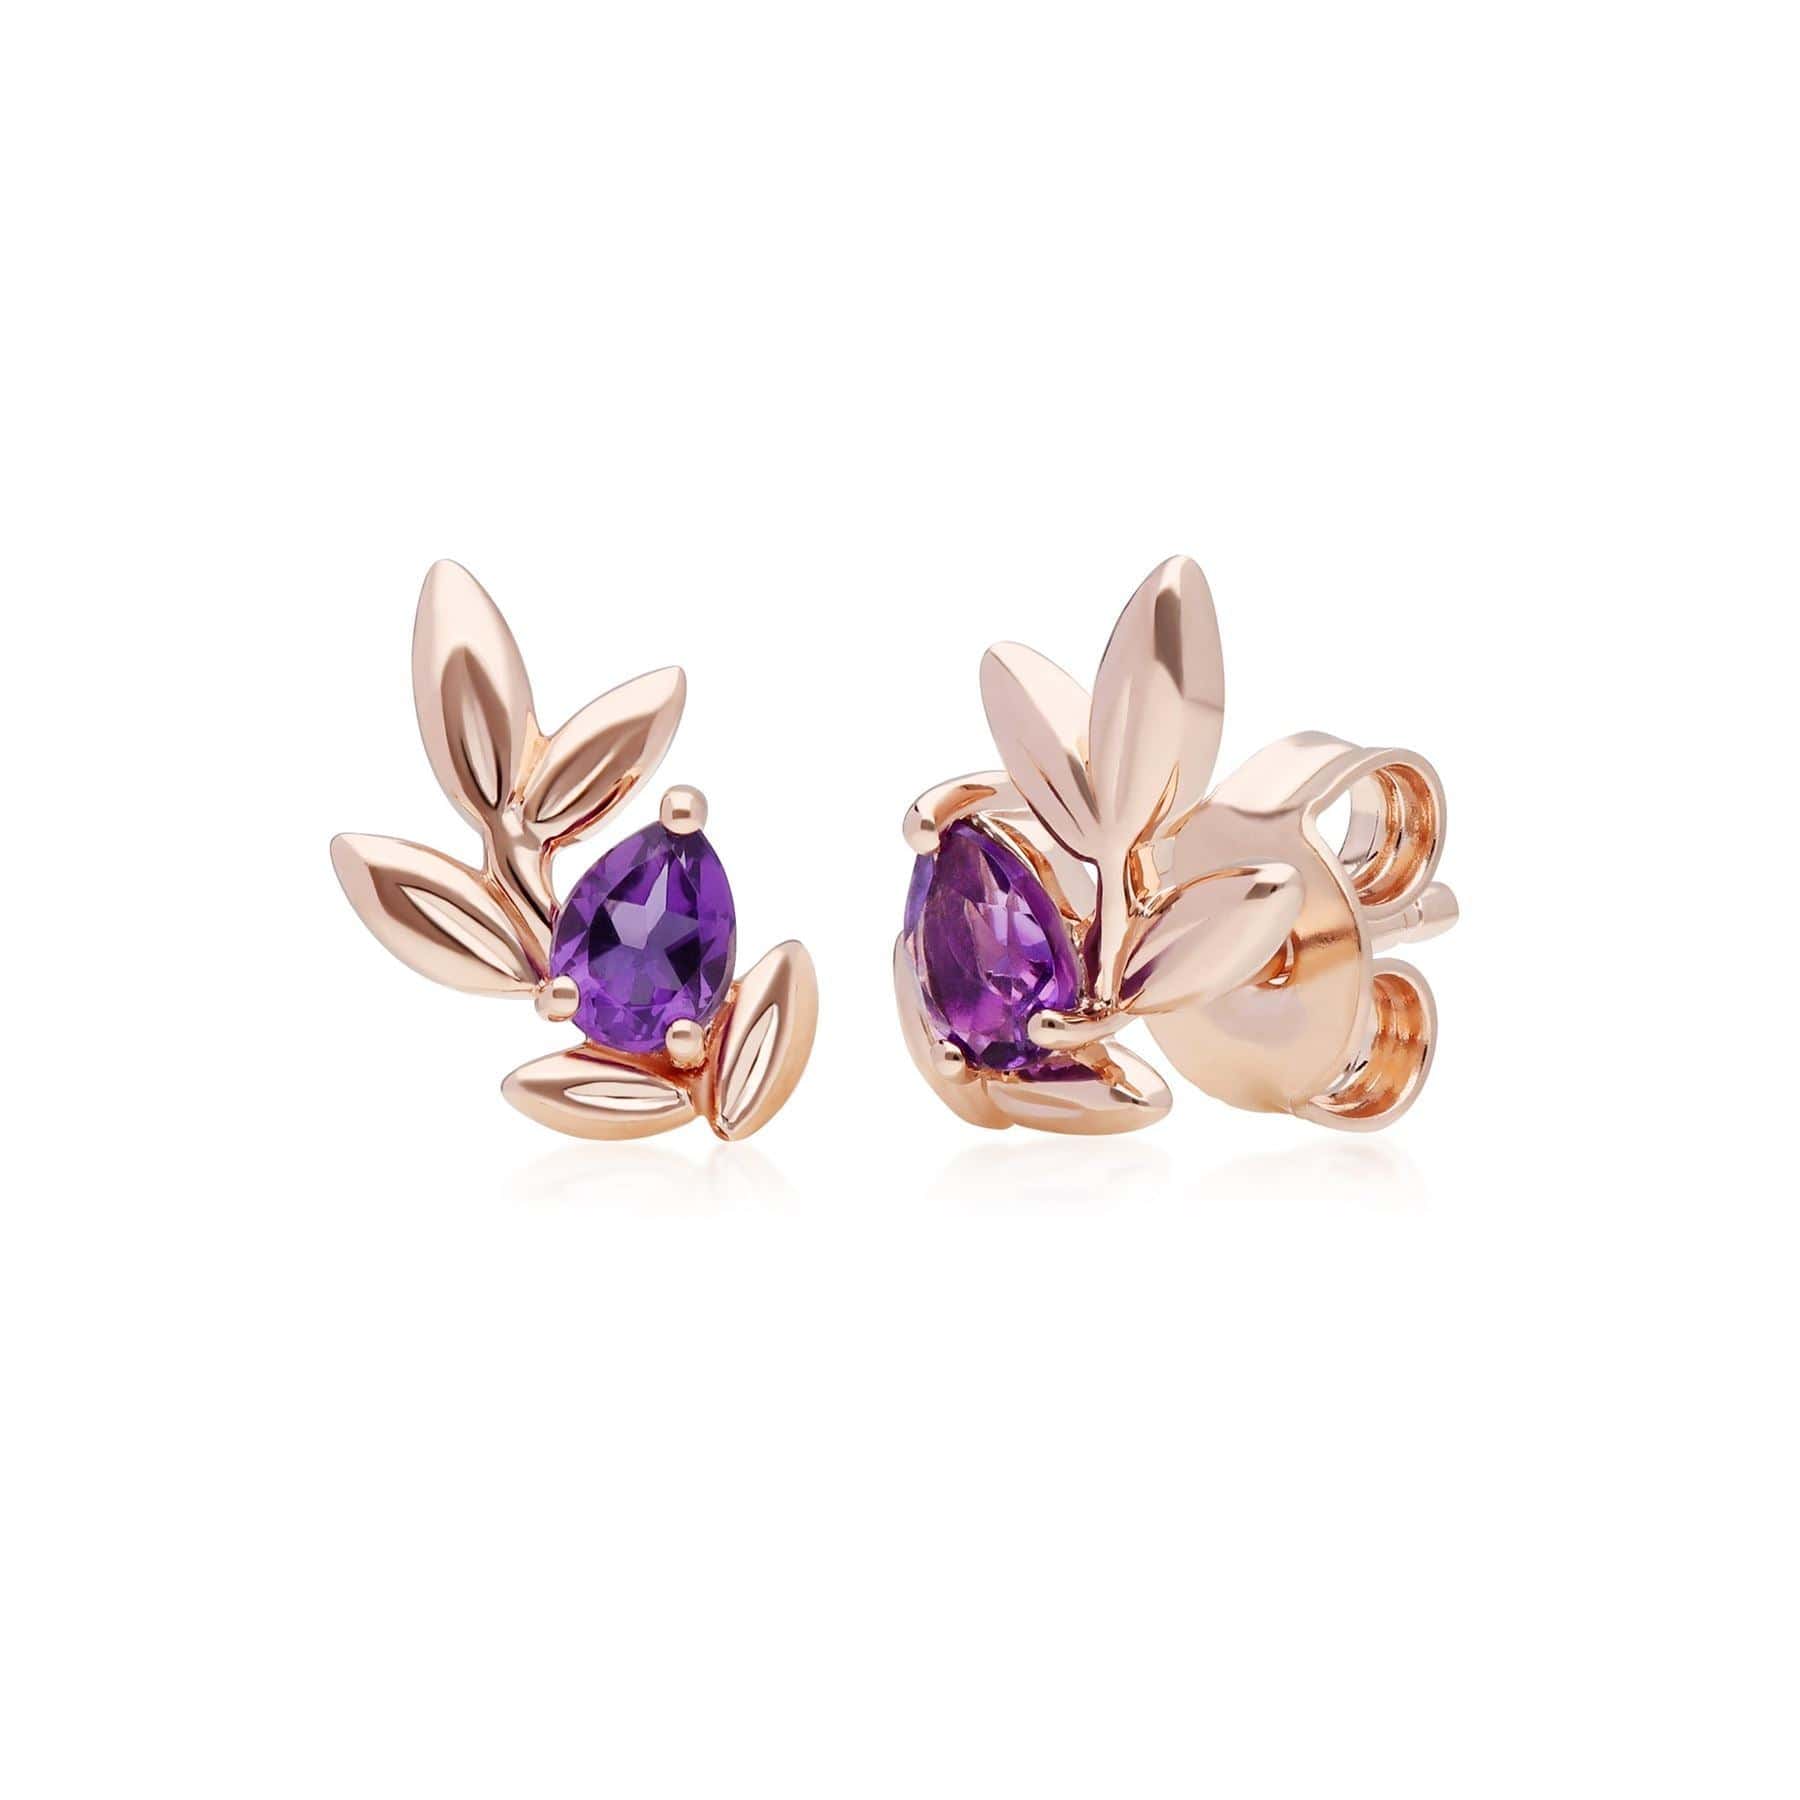 135N0364019-135E1642019 O Leaf Amethyst Necklace & Stud Earring Set in 9ct Rose Gold 5